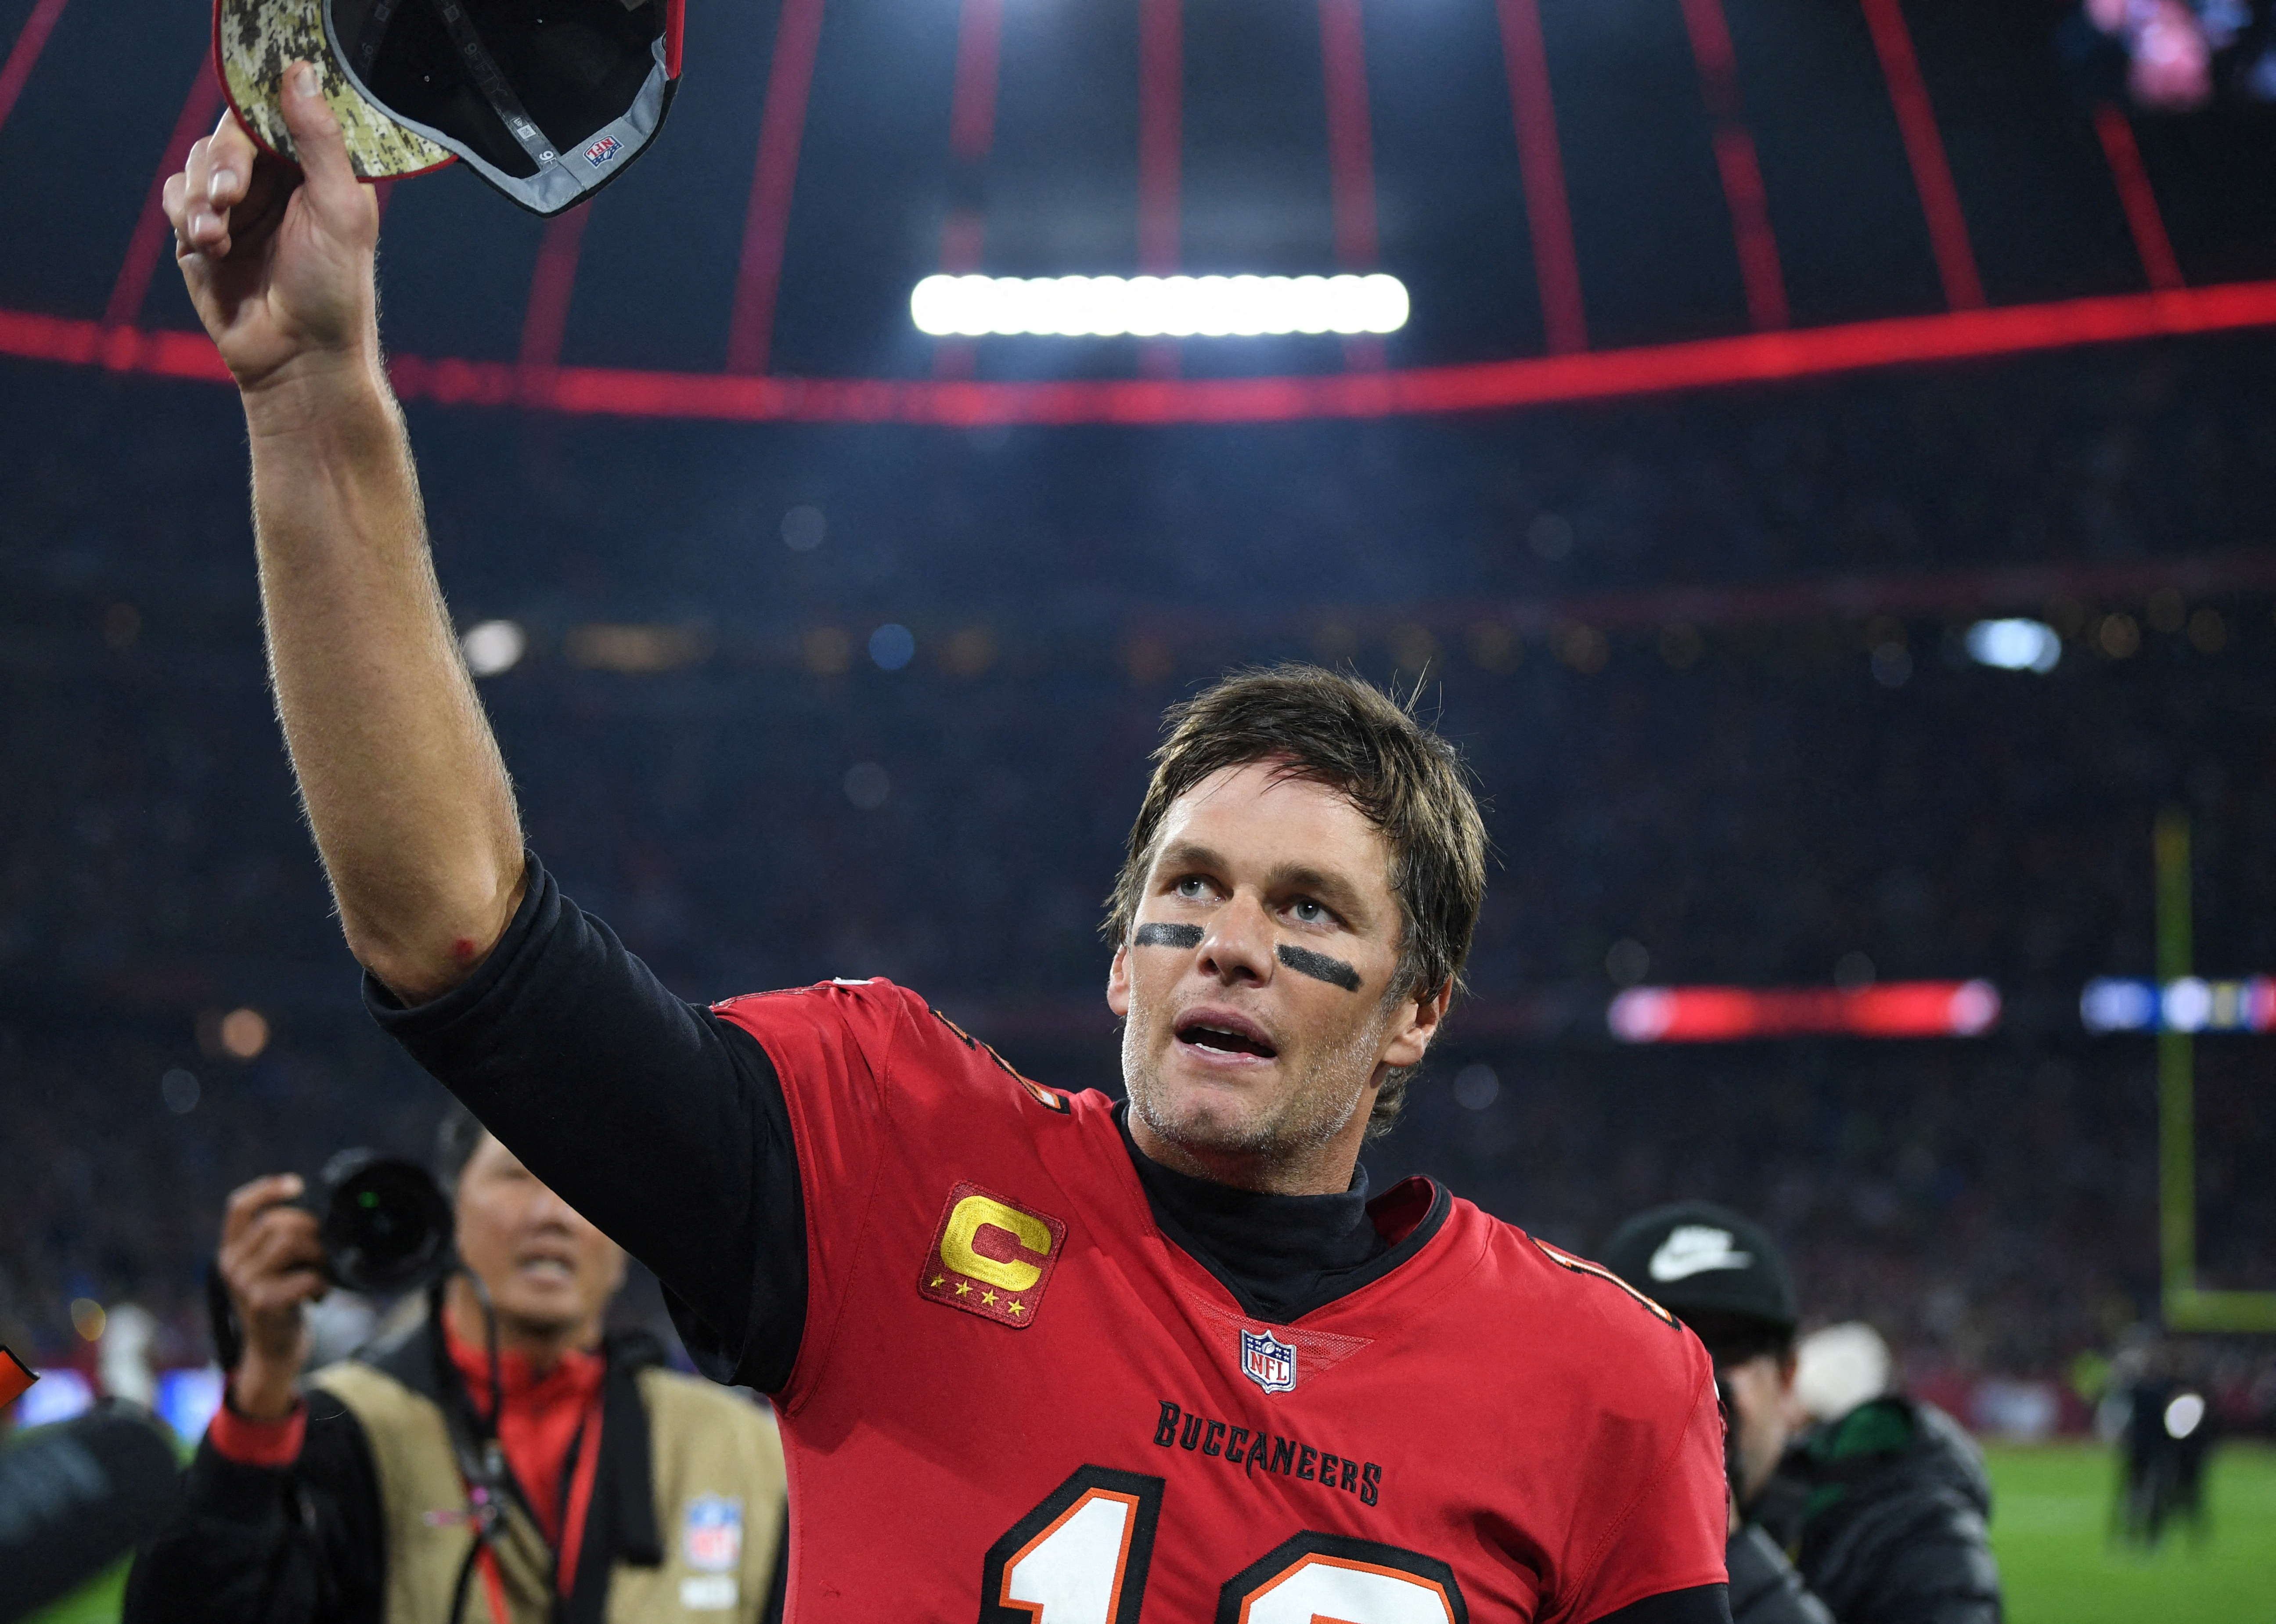 NFL quarterback Tom Brady says he is retiring “for good“